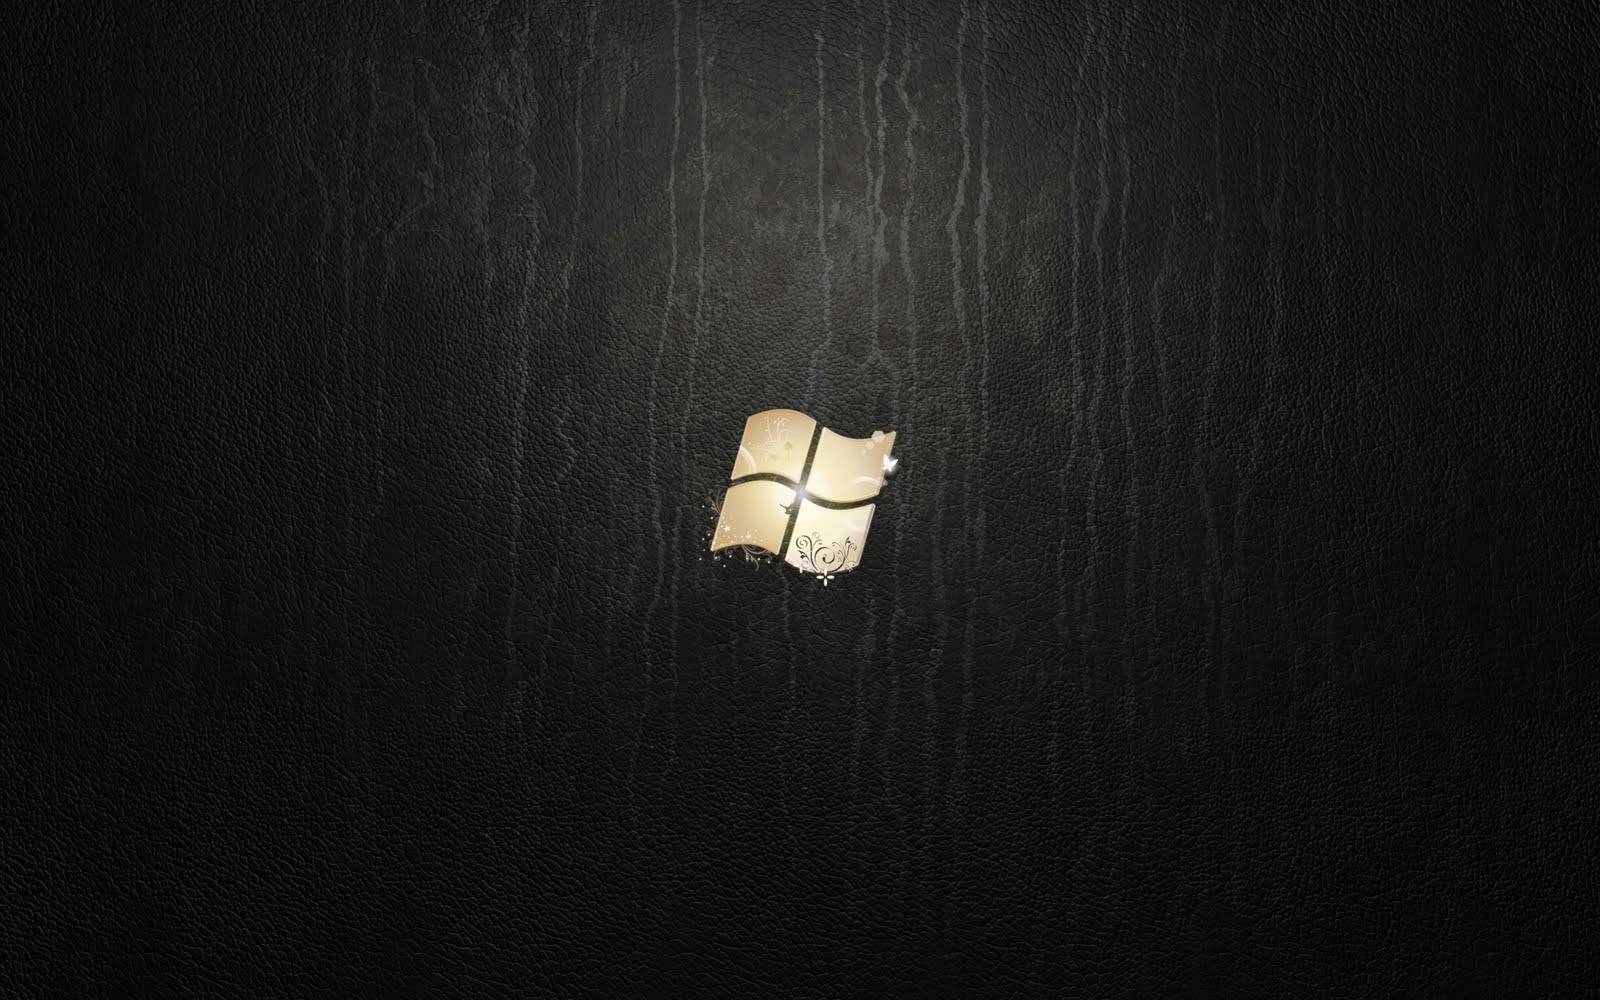 image For > Windows 7 Wallpaper Black